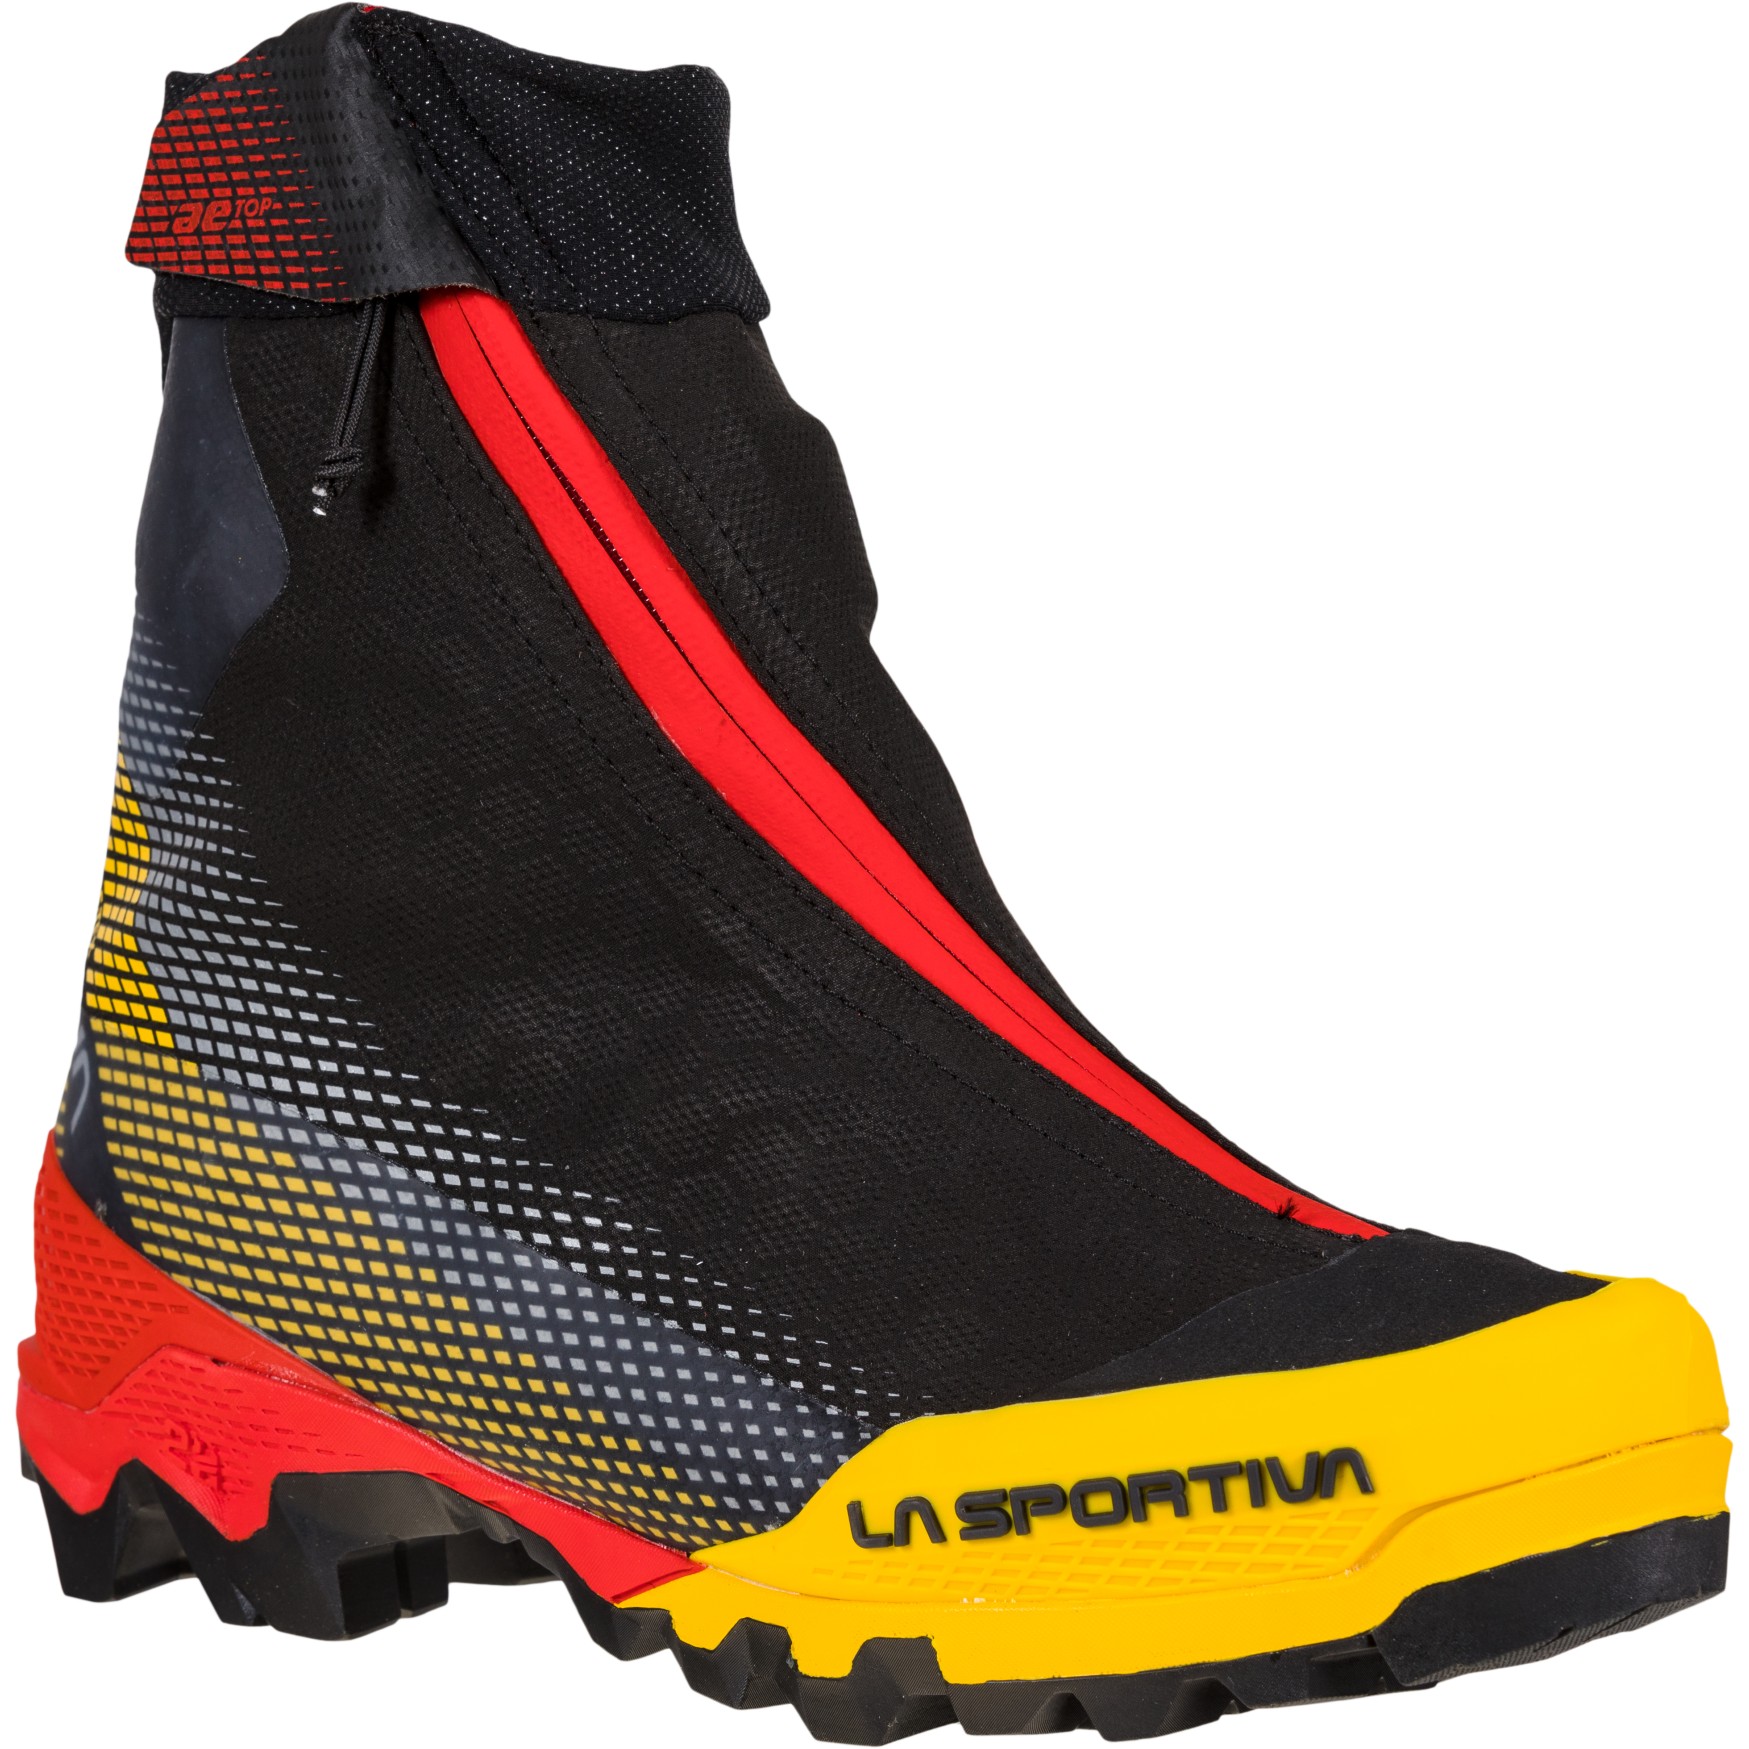 https://images.bike24.com/i/mb/67/e1/93/la-sportiva-aequilibrium-top-gtx-mountaineering-shoes-black-yellow-2-1541016.jpg